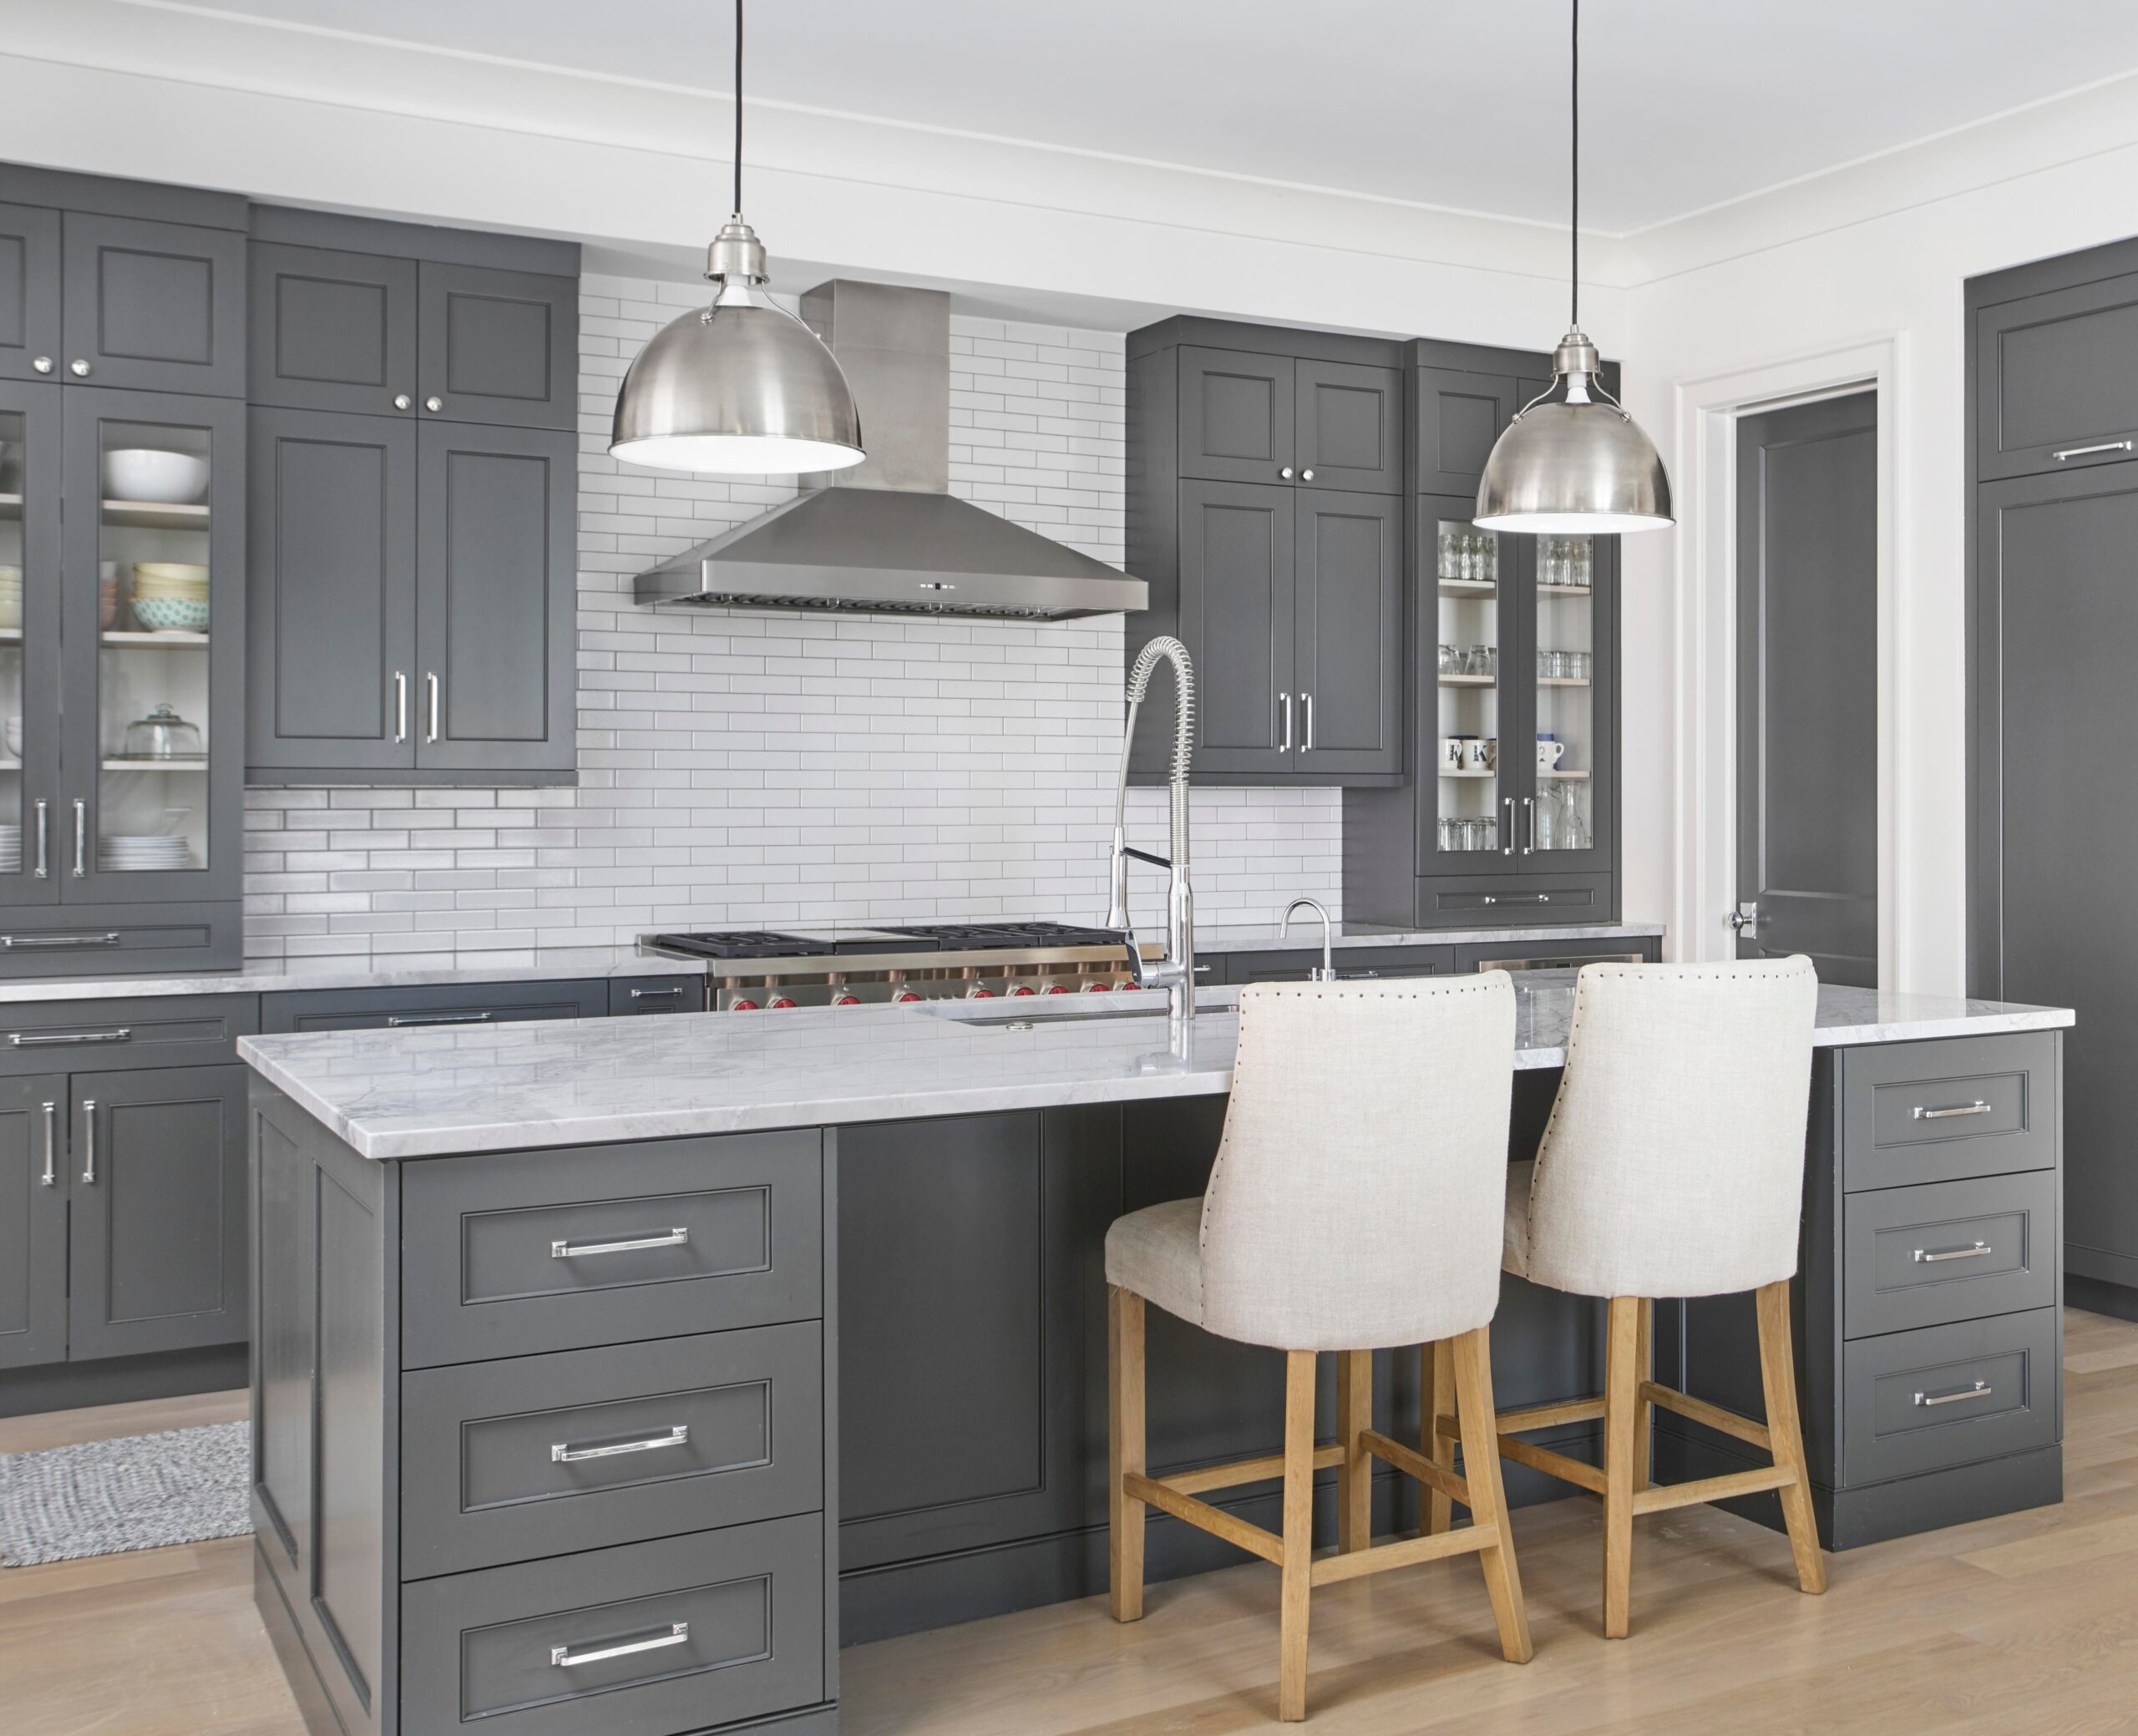 3 Sophisticated Gray Kitchen Ideas - Chic Gray Kitchens - grey kitchens best designs